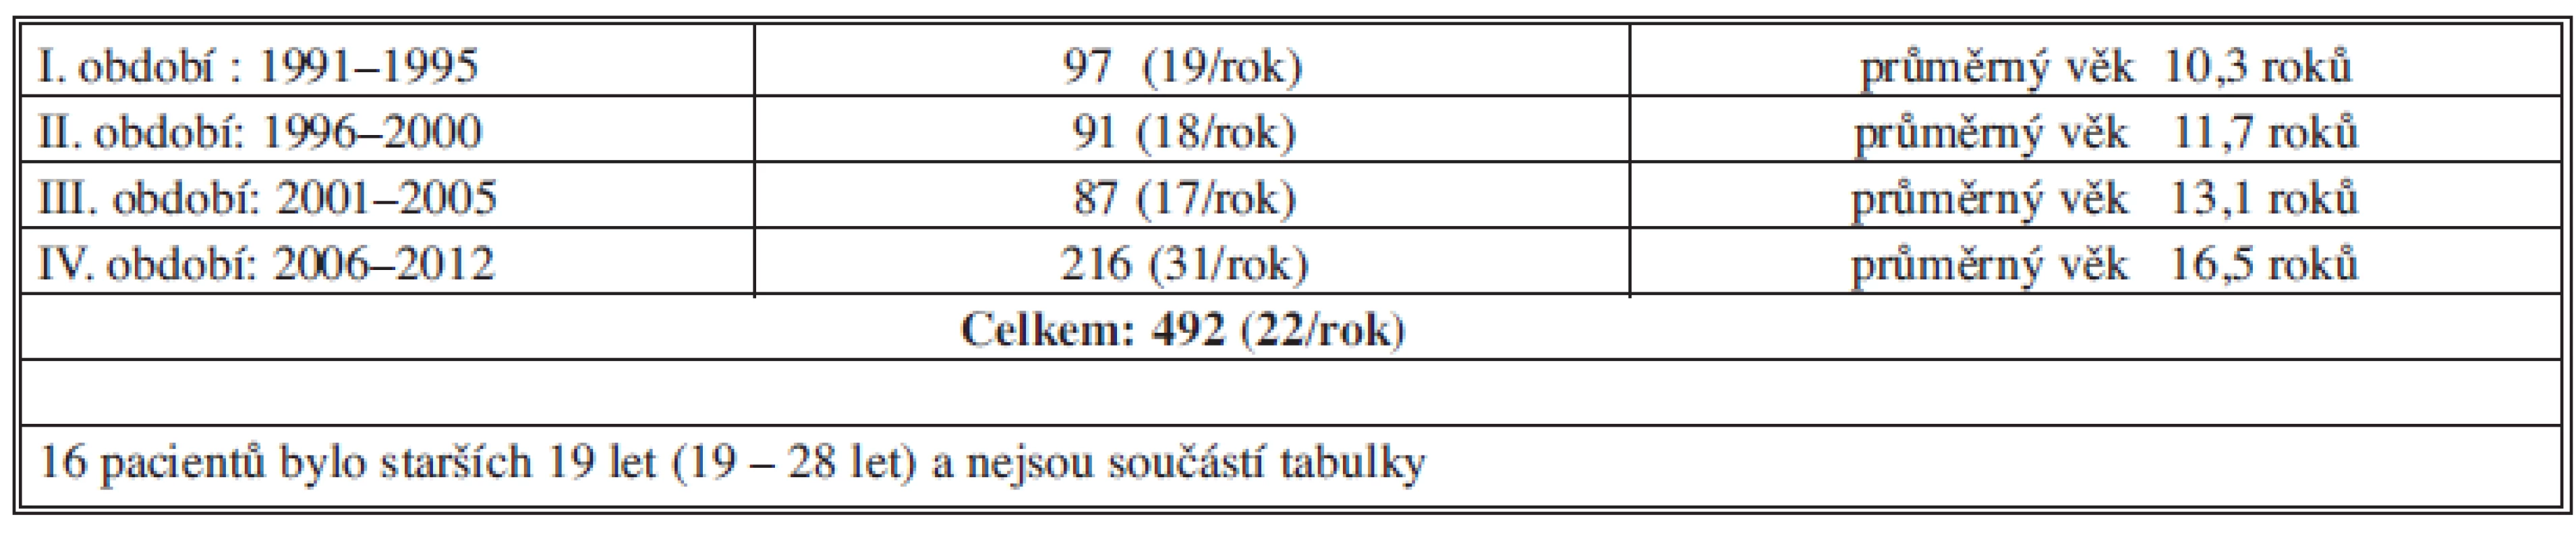 508 operací vpáčeného hrudníku za období 1991–2012
Tab. 1: 508 operations of pectus excavatum in period 1991–2012